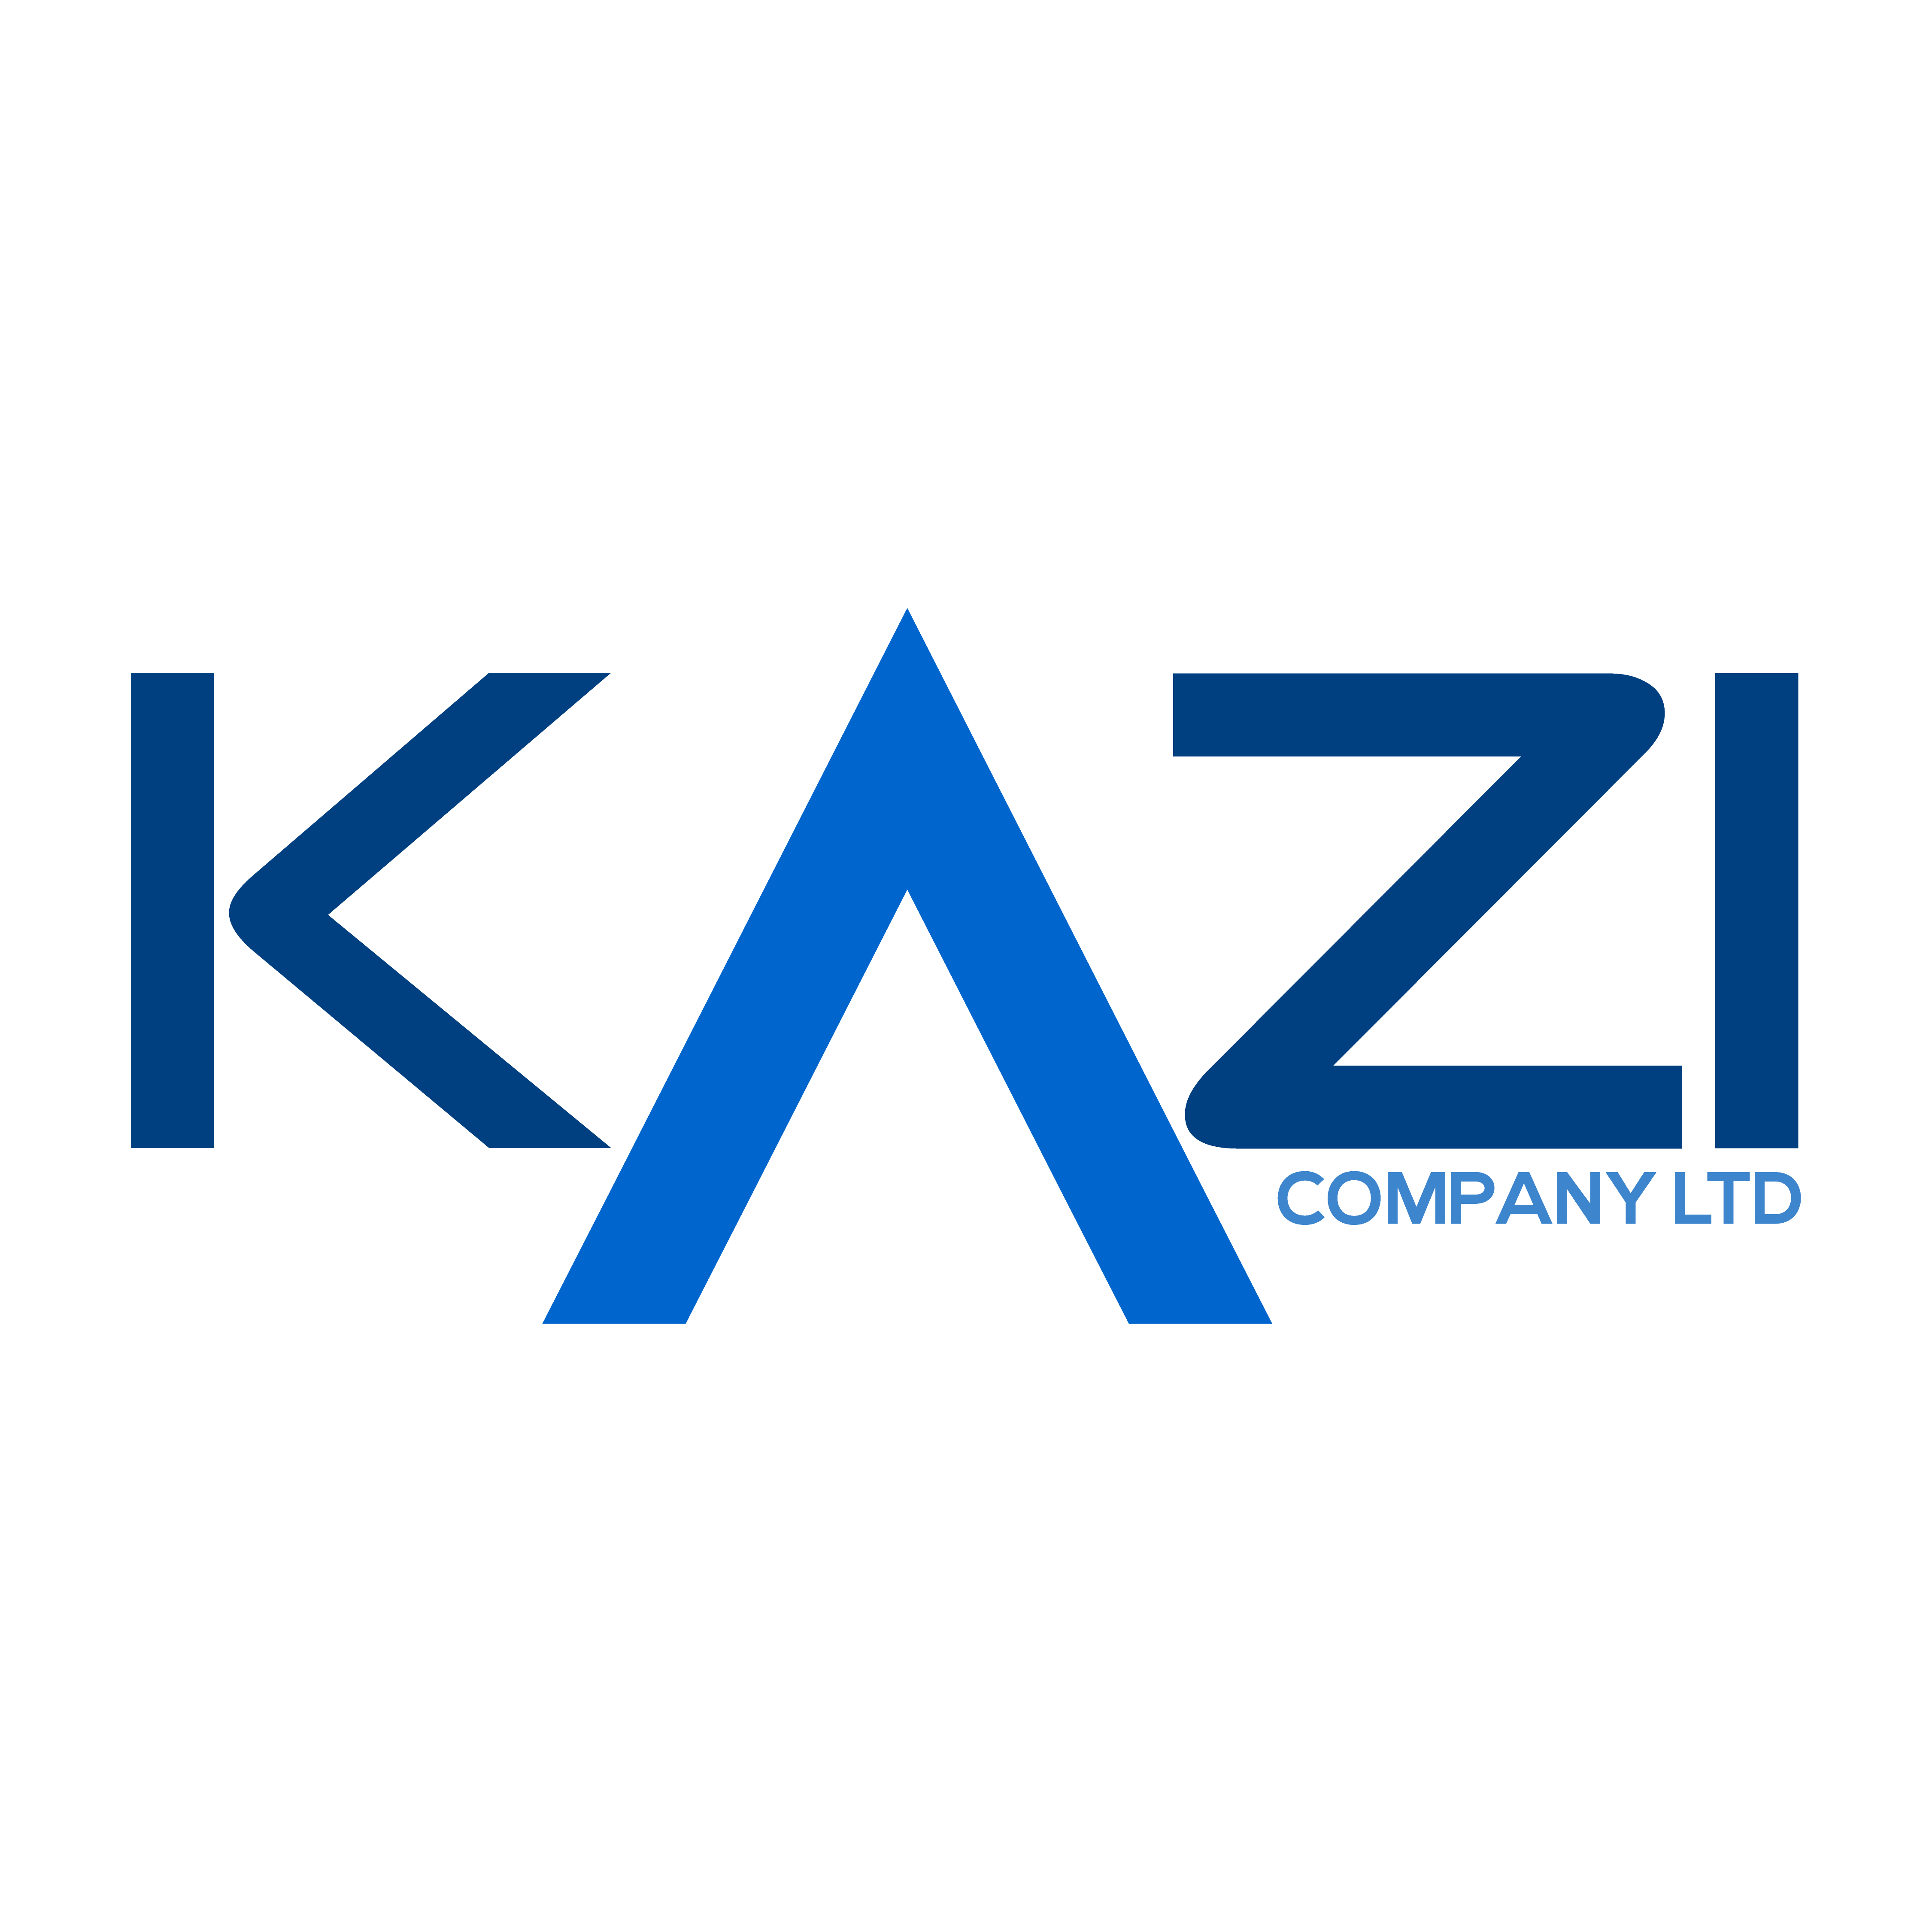 Kazi Company | Beyond Growth